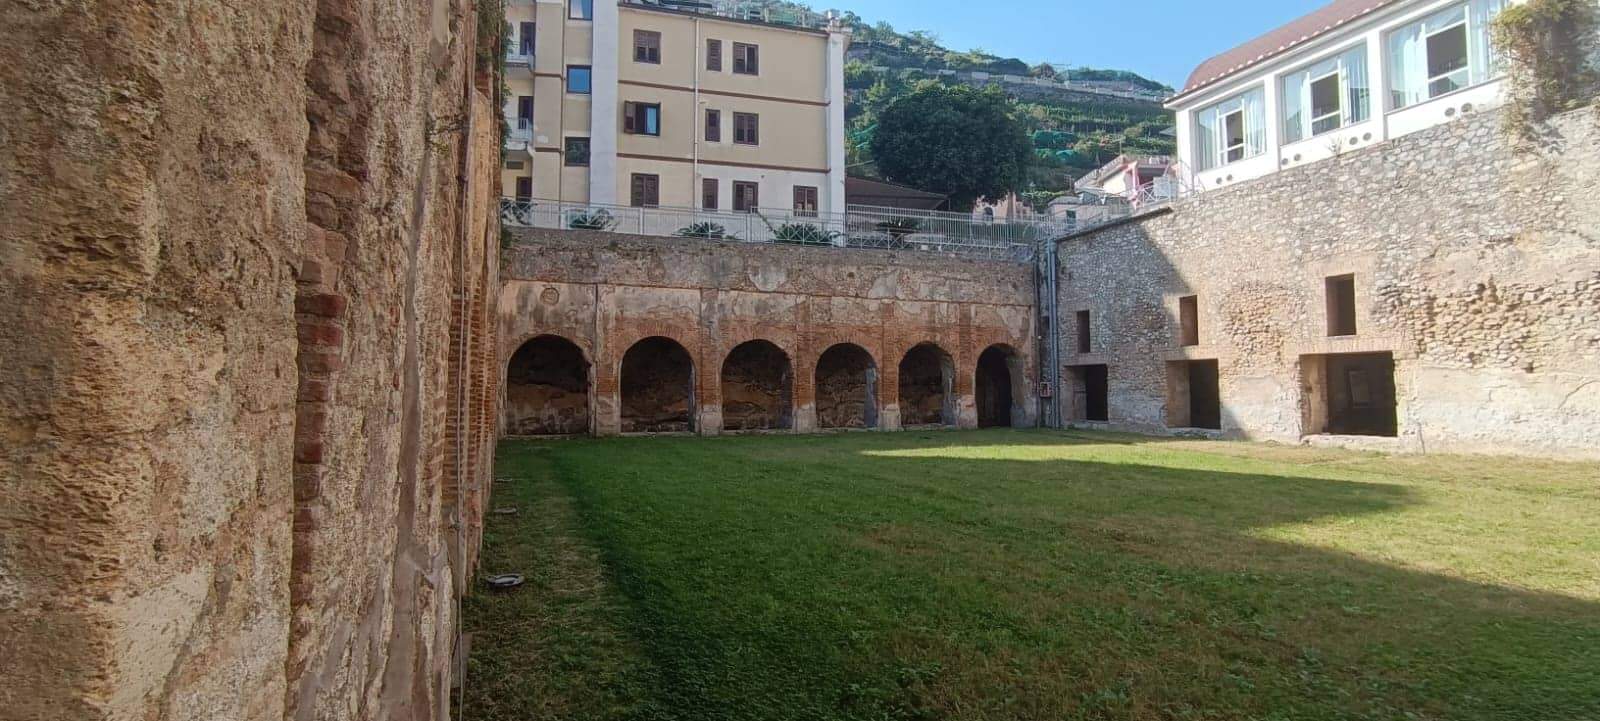 Amalfi Coast, restoration of the Roman Villa in Minori begins